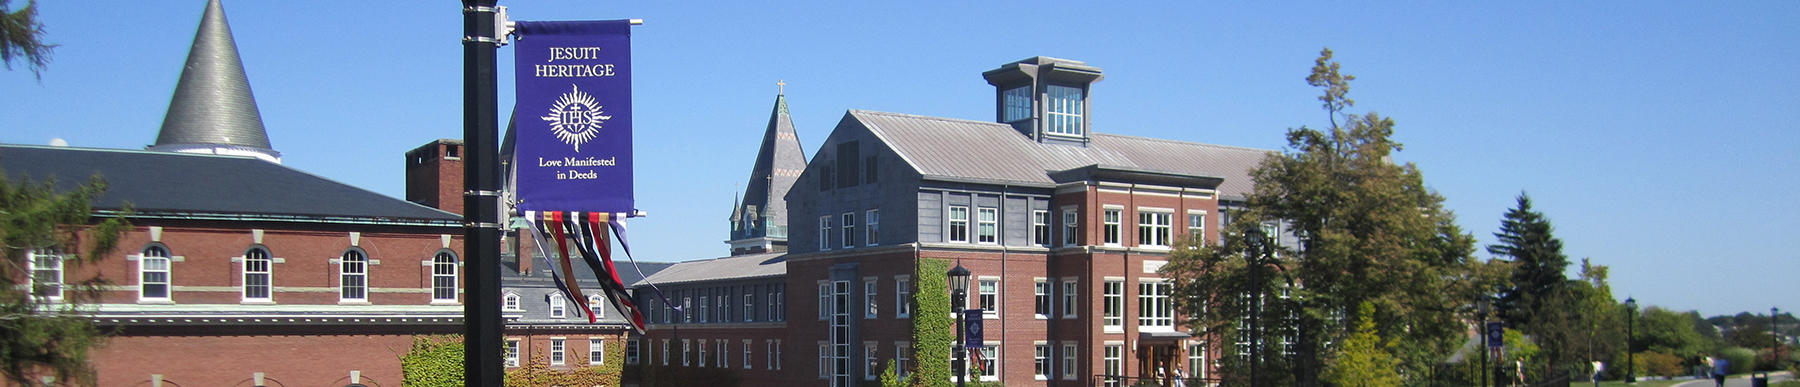 image of smith hall, okane and fenwick hall with a purple jesuit heritage banner